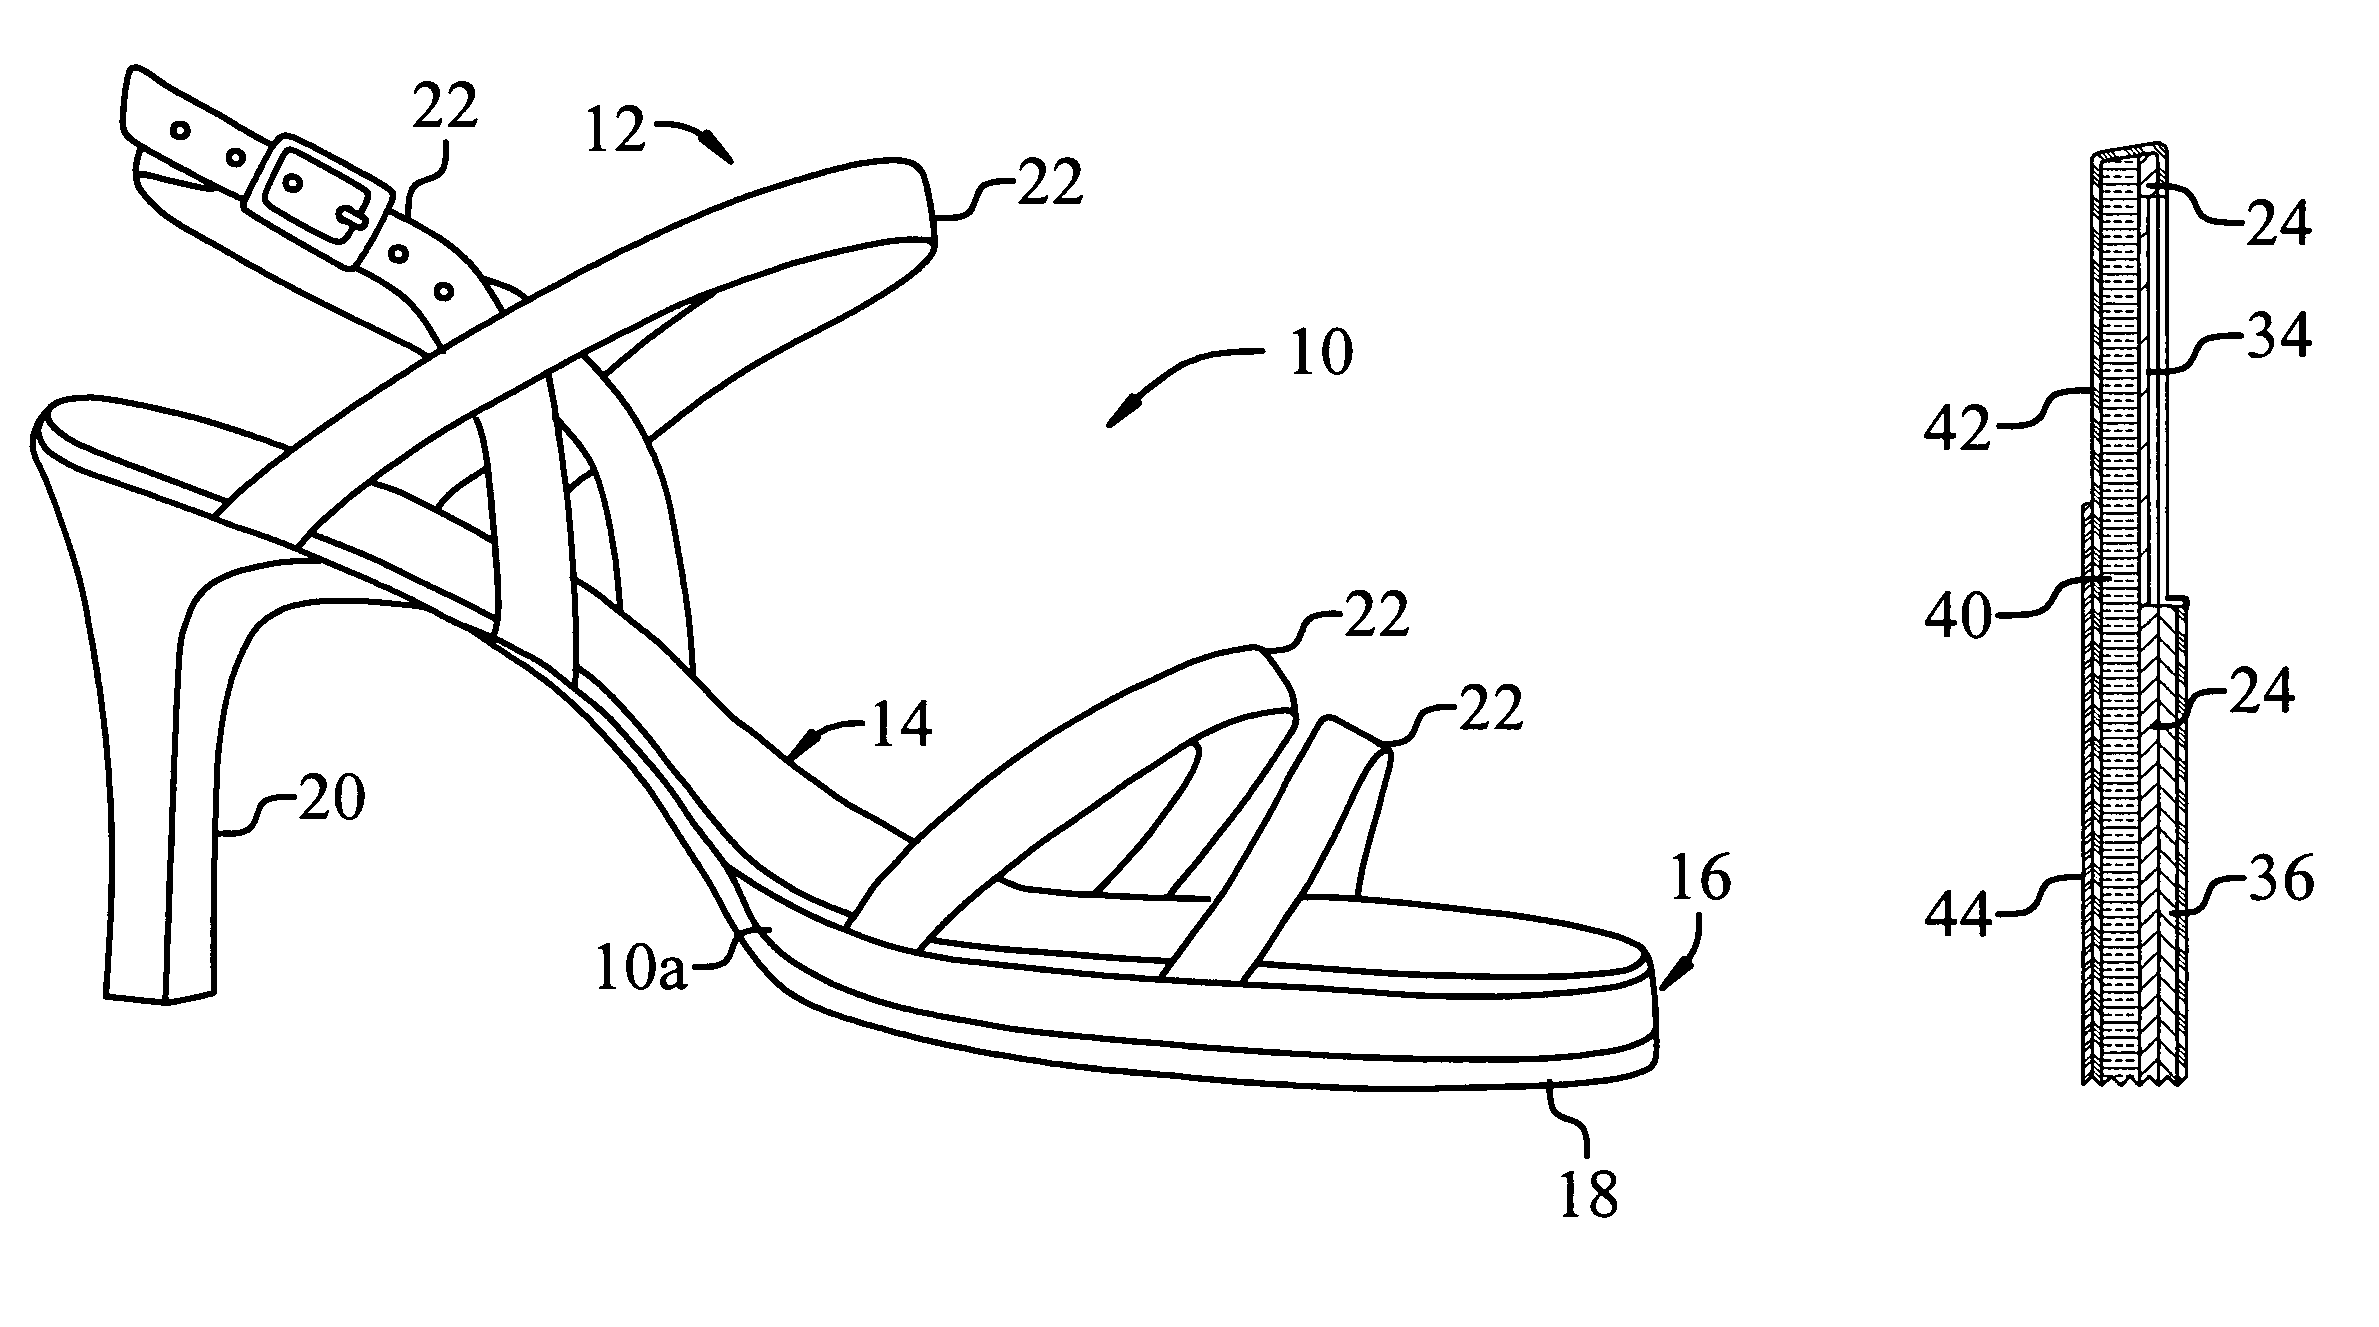 High heel shoe cushion system